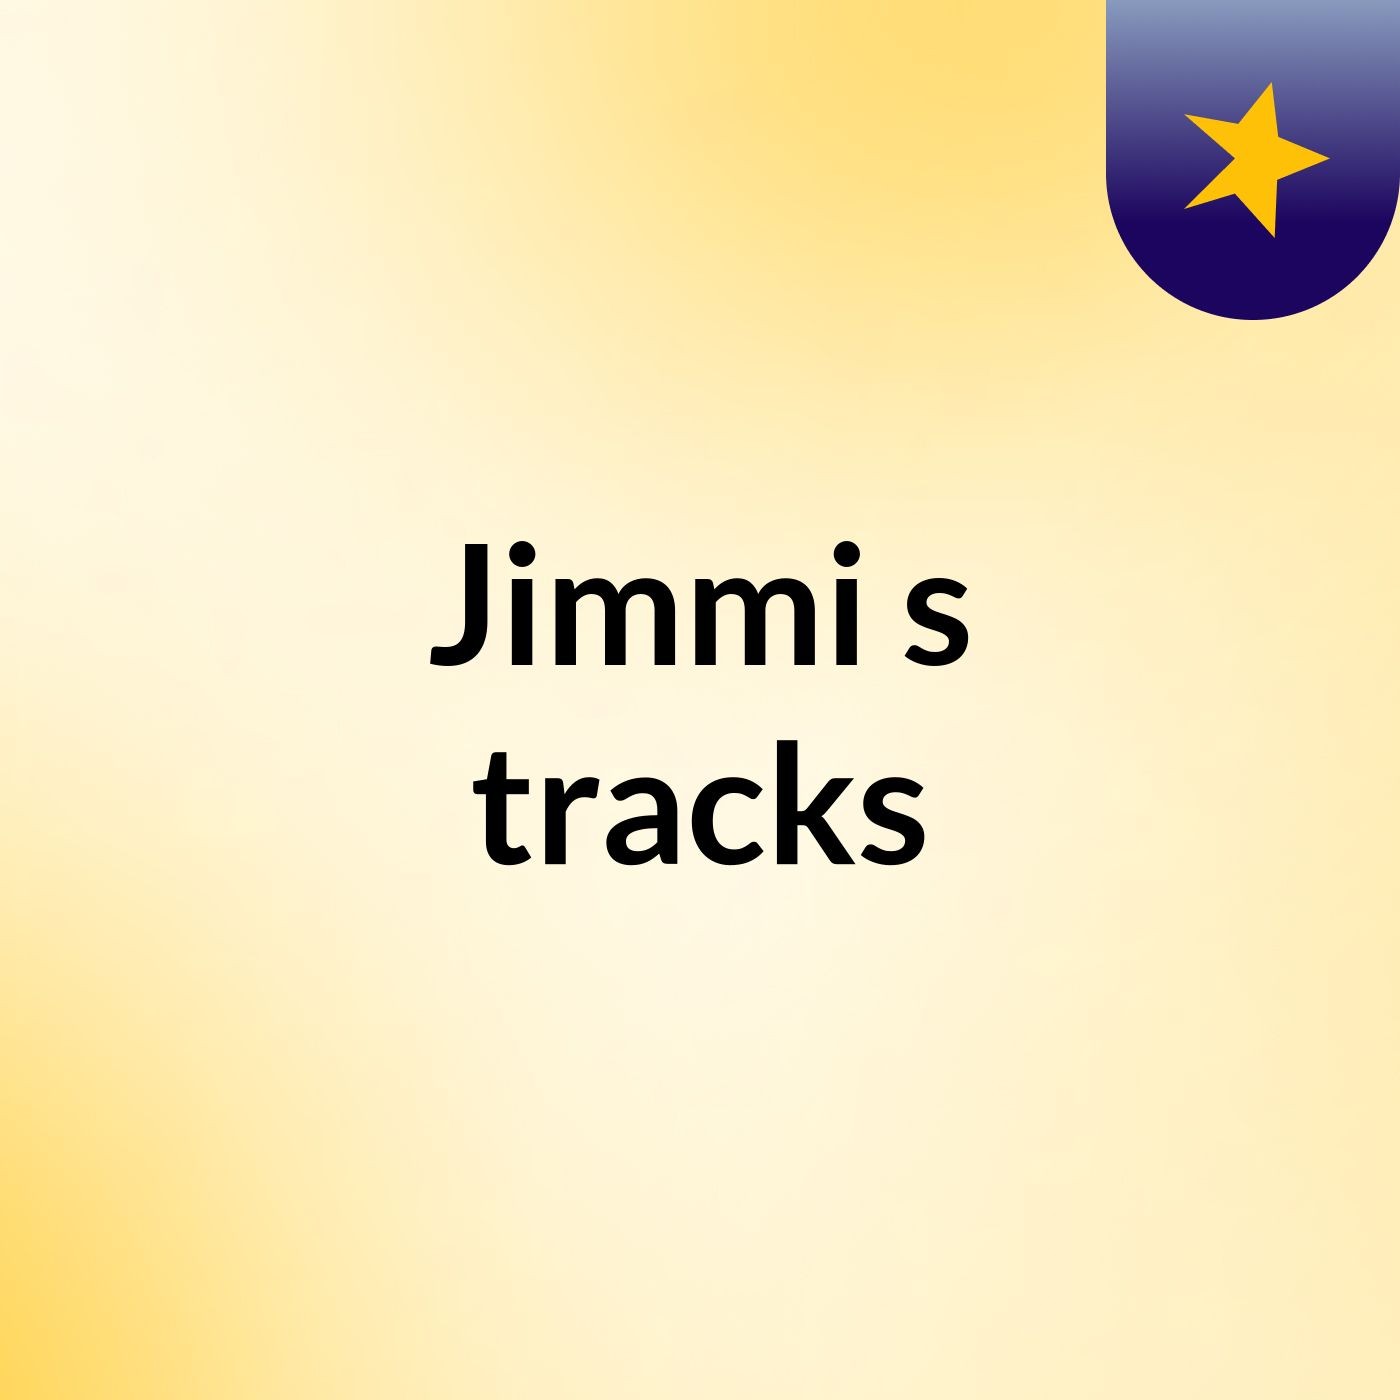 Jimmi's tracks